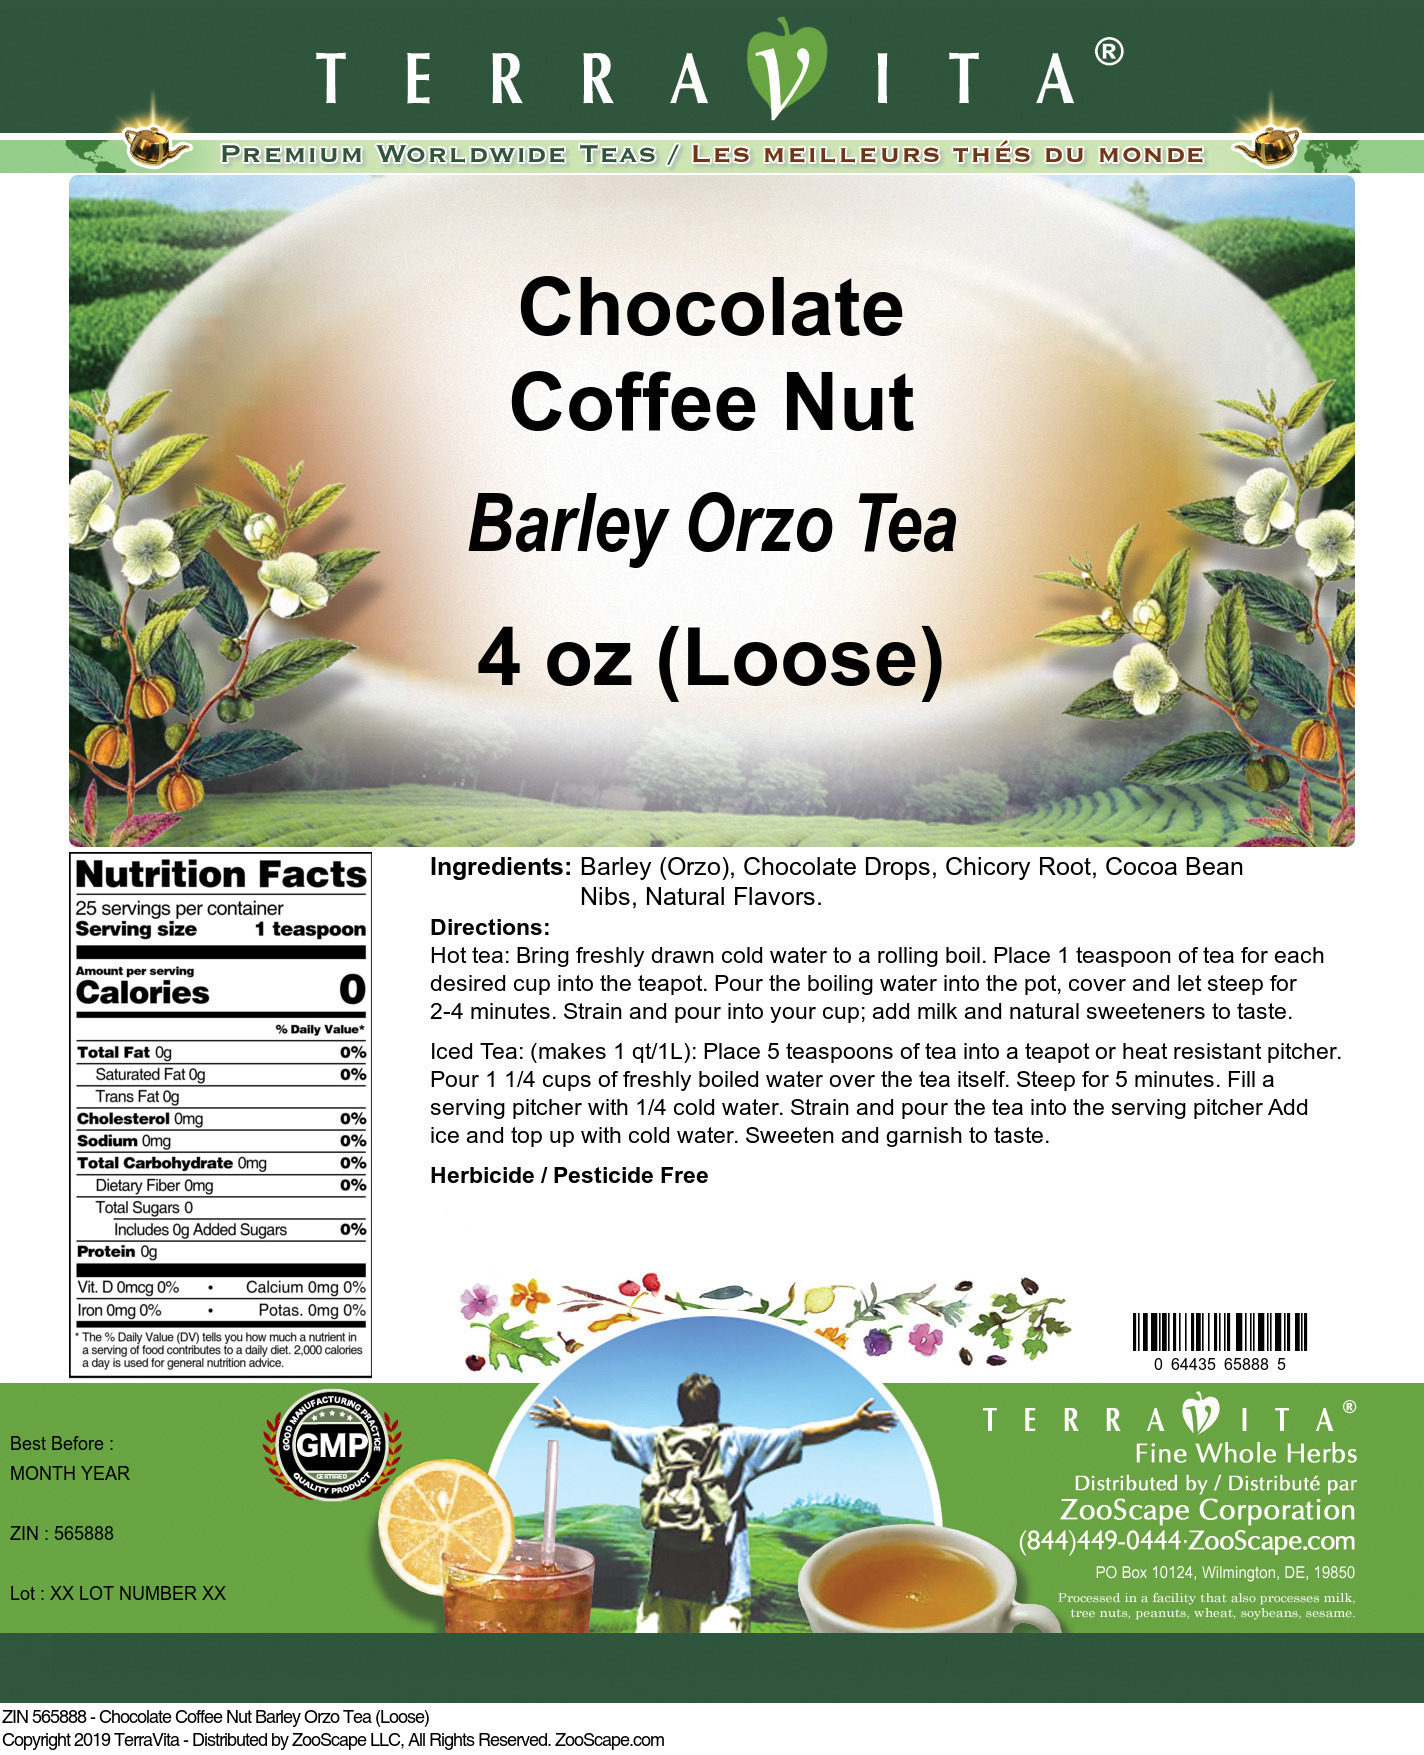 Chocolate Coffee Nut Barley Orzo Tea (Loose) - Label